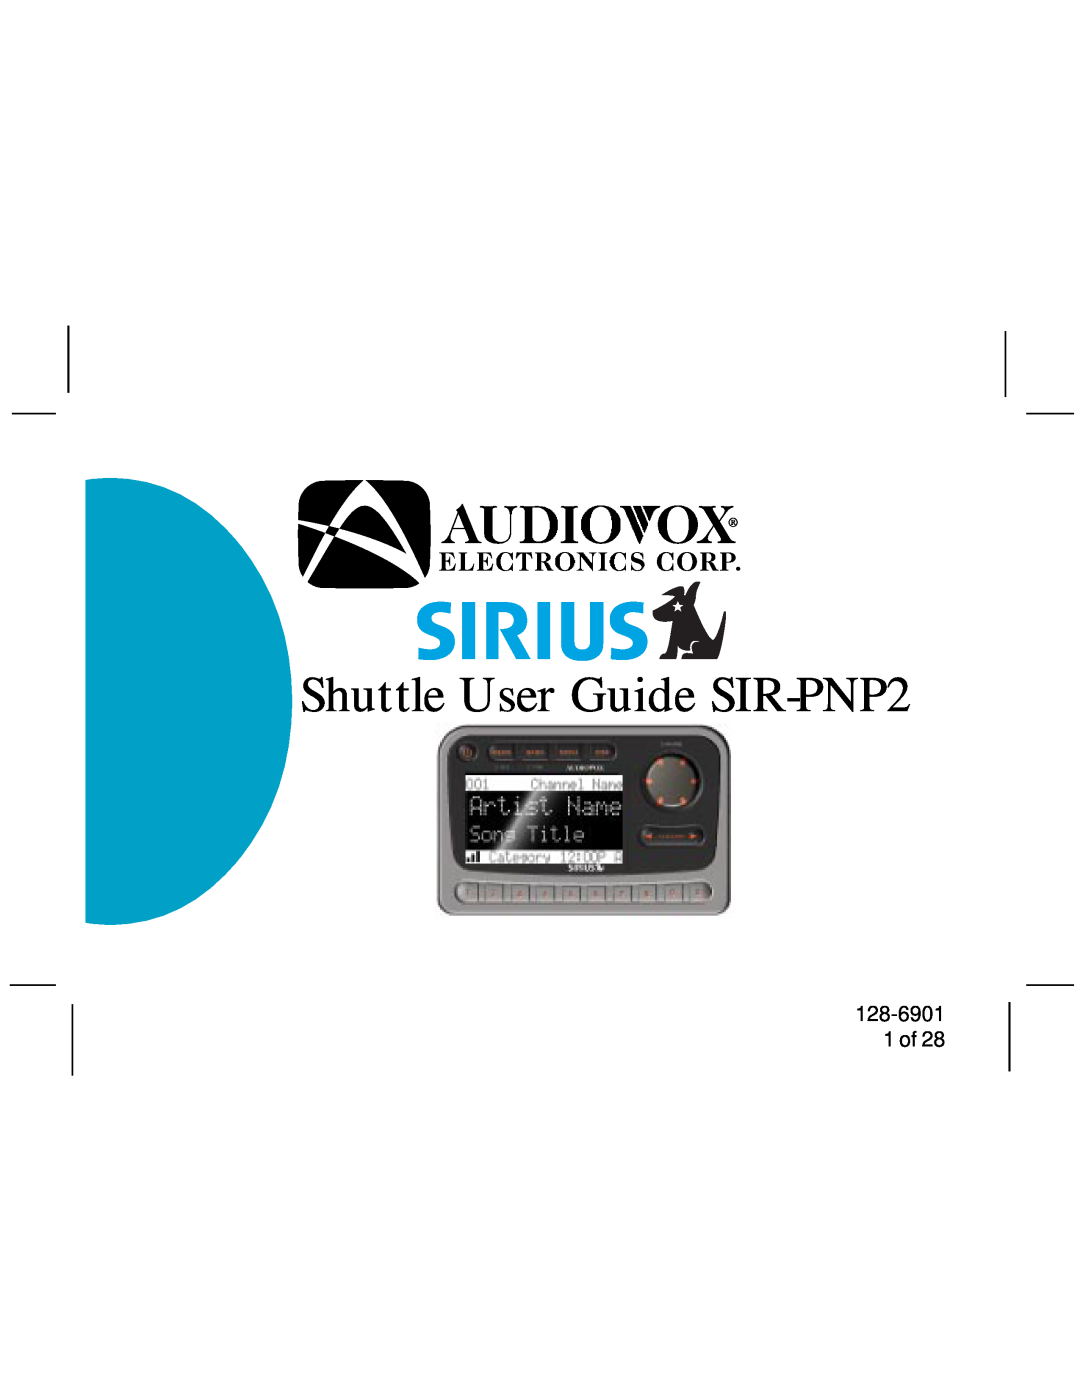 Audiovox manual 128-6901 1 of, Shuttle User Guide SIR-PNP2 